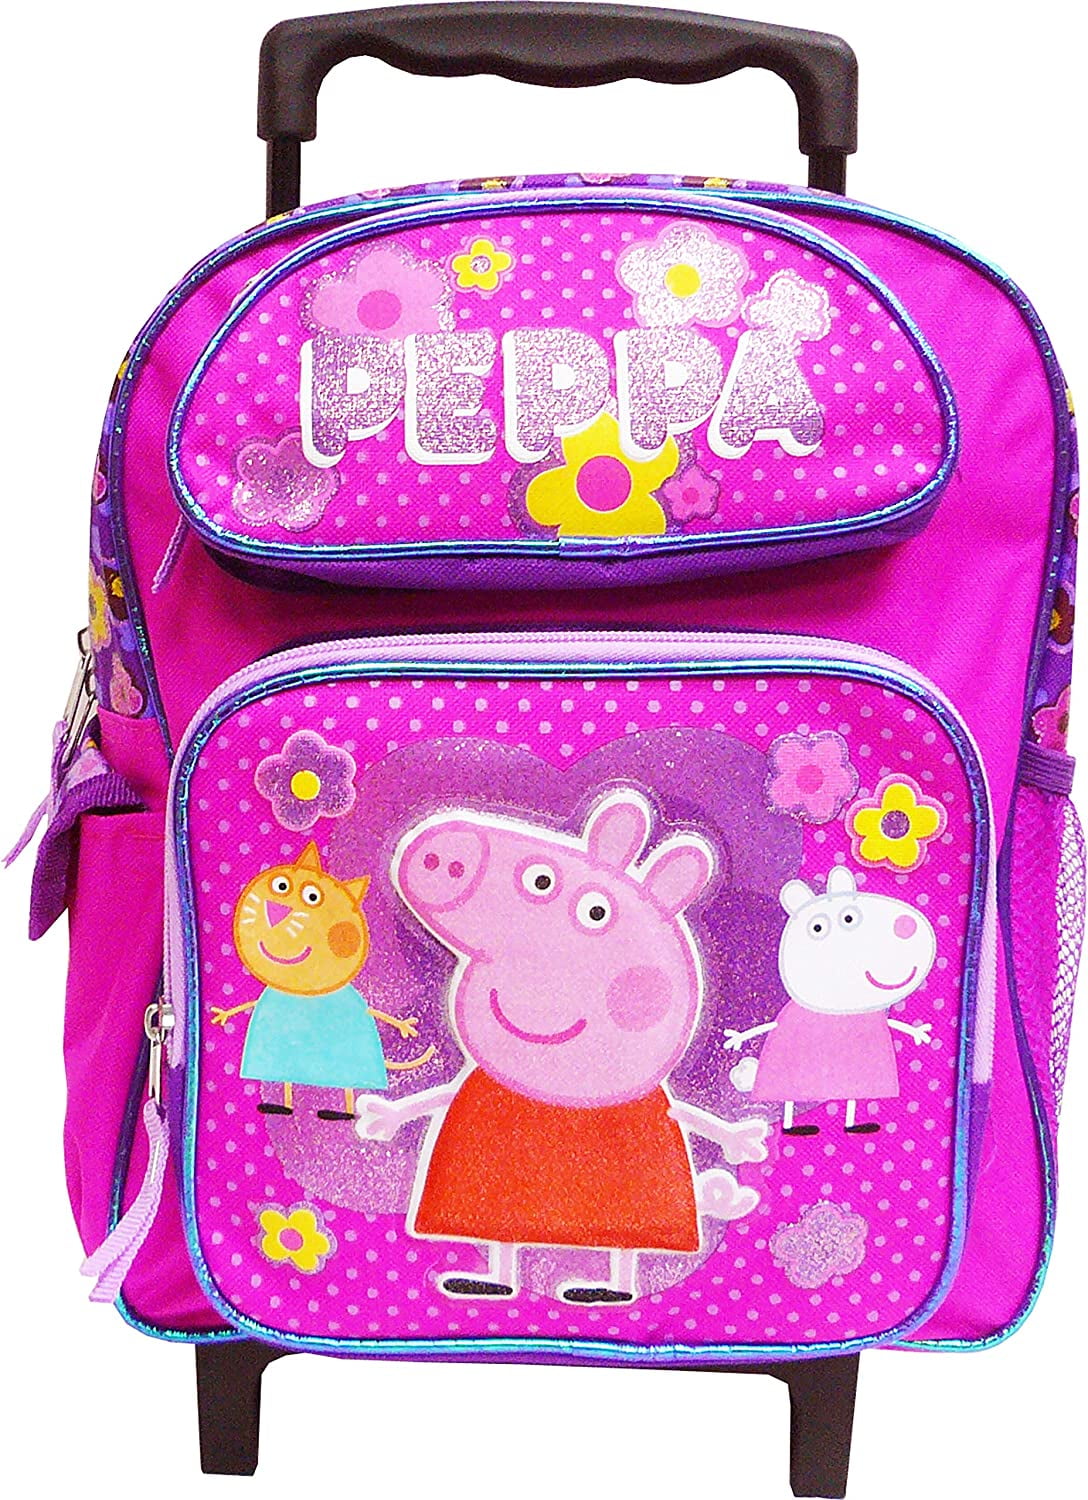 Disney Peppa Pig Girls Backpack | Pink George Pig Adventure | Merchandise Rucksack with Pencil Case, Water Bottle | Back to School